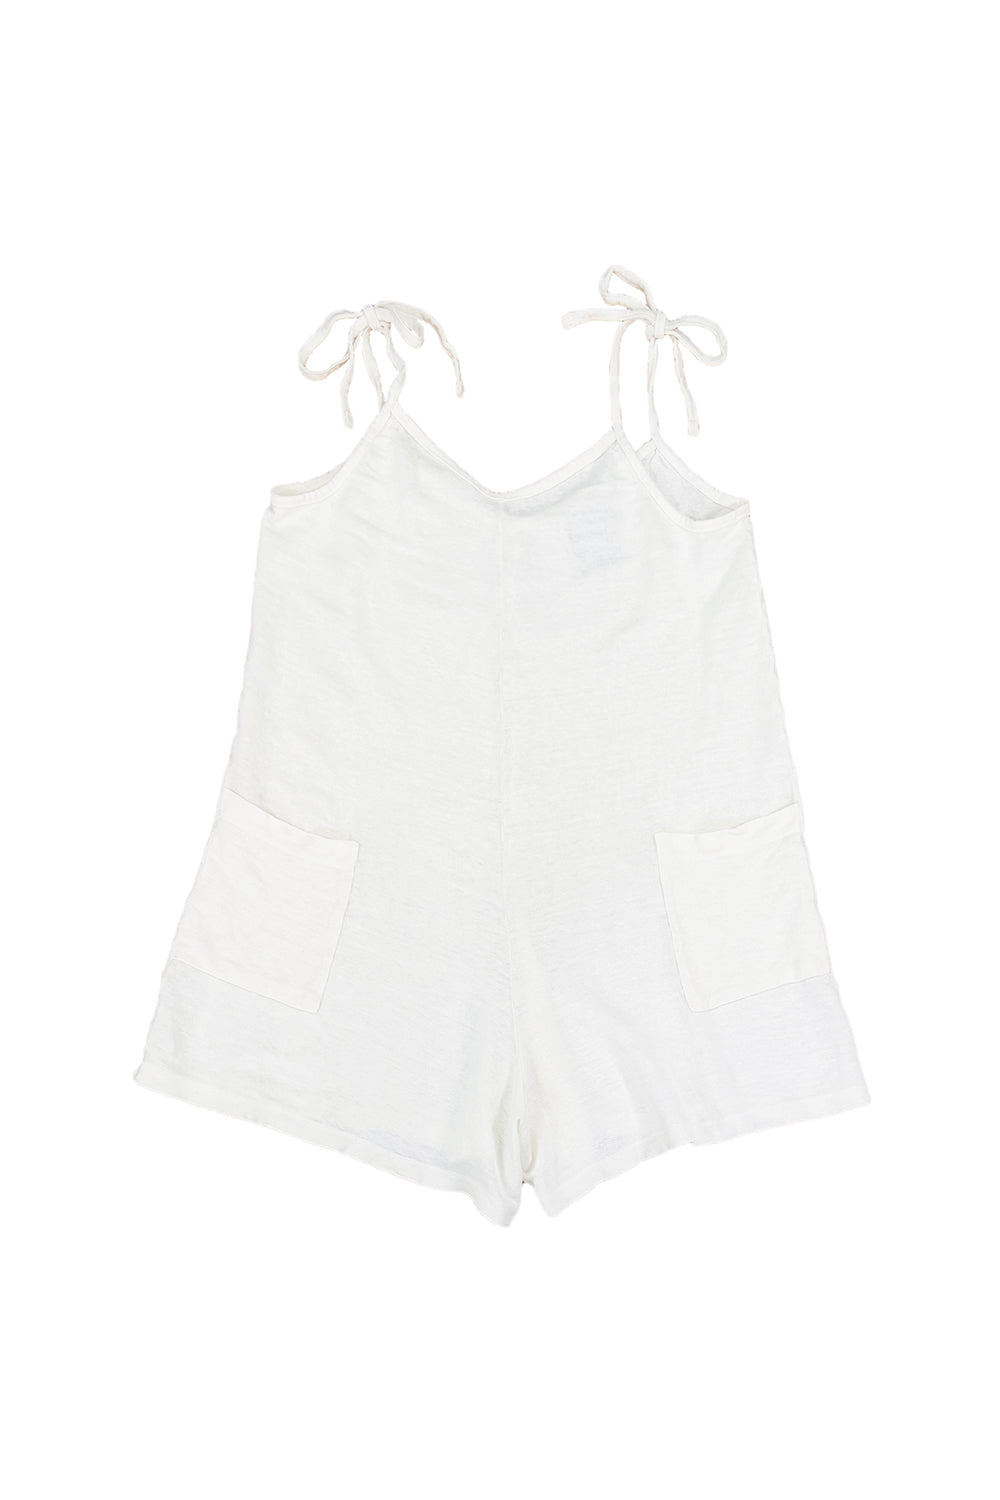 100% Hemp Sespe Short | Jungmaven Hemp Clothing & Accessories / Color: Washed White